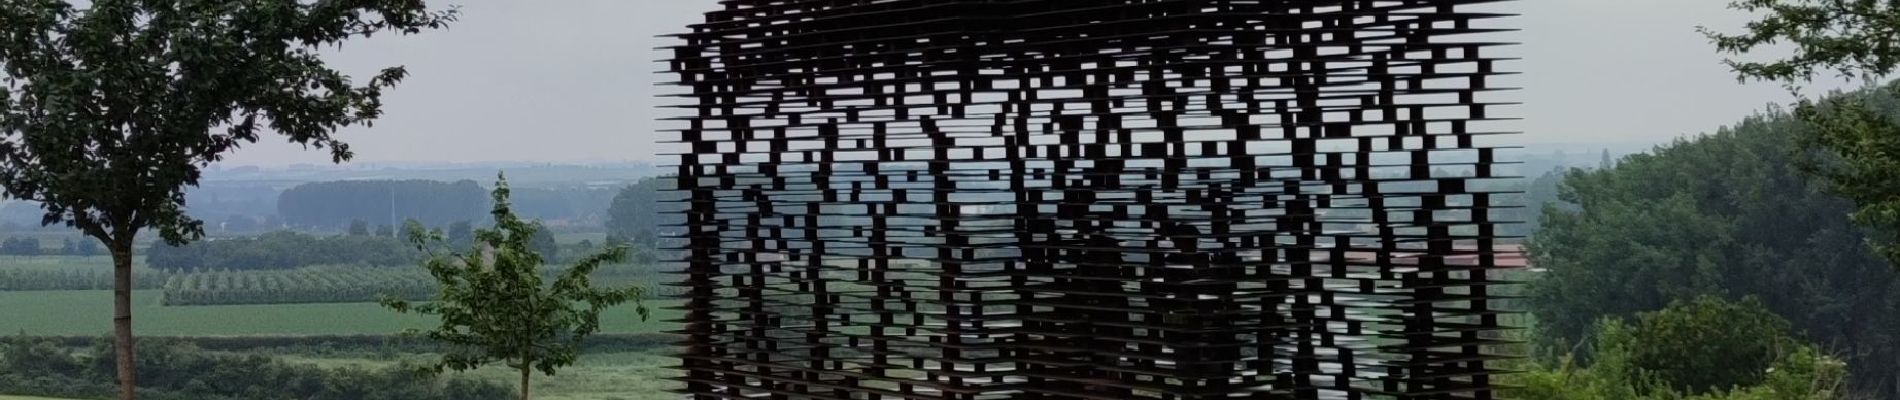 Tocht Stappen Borgloon - A travers les vergers de Borgloon  - Photo